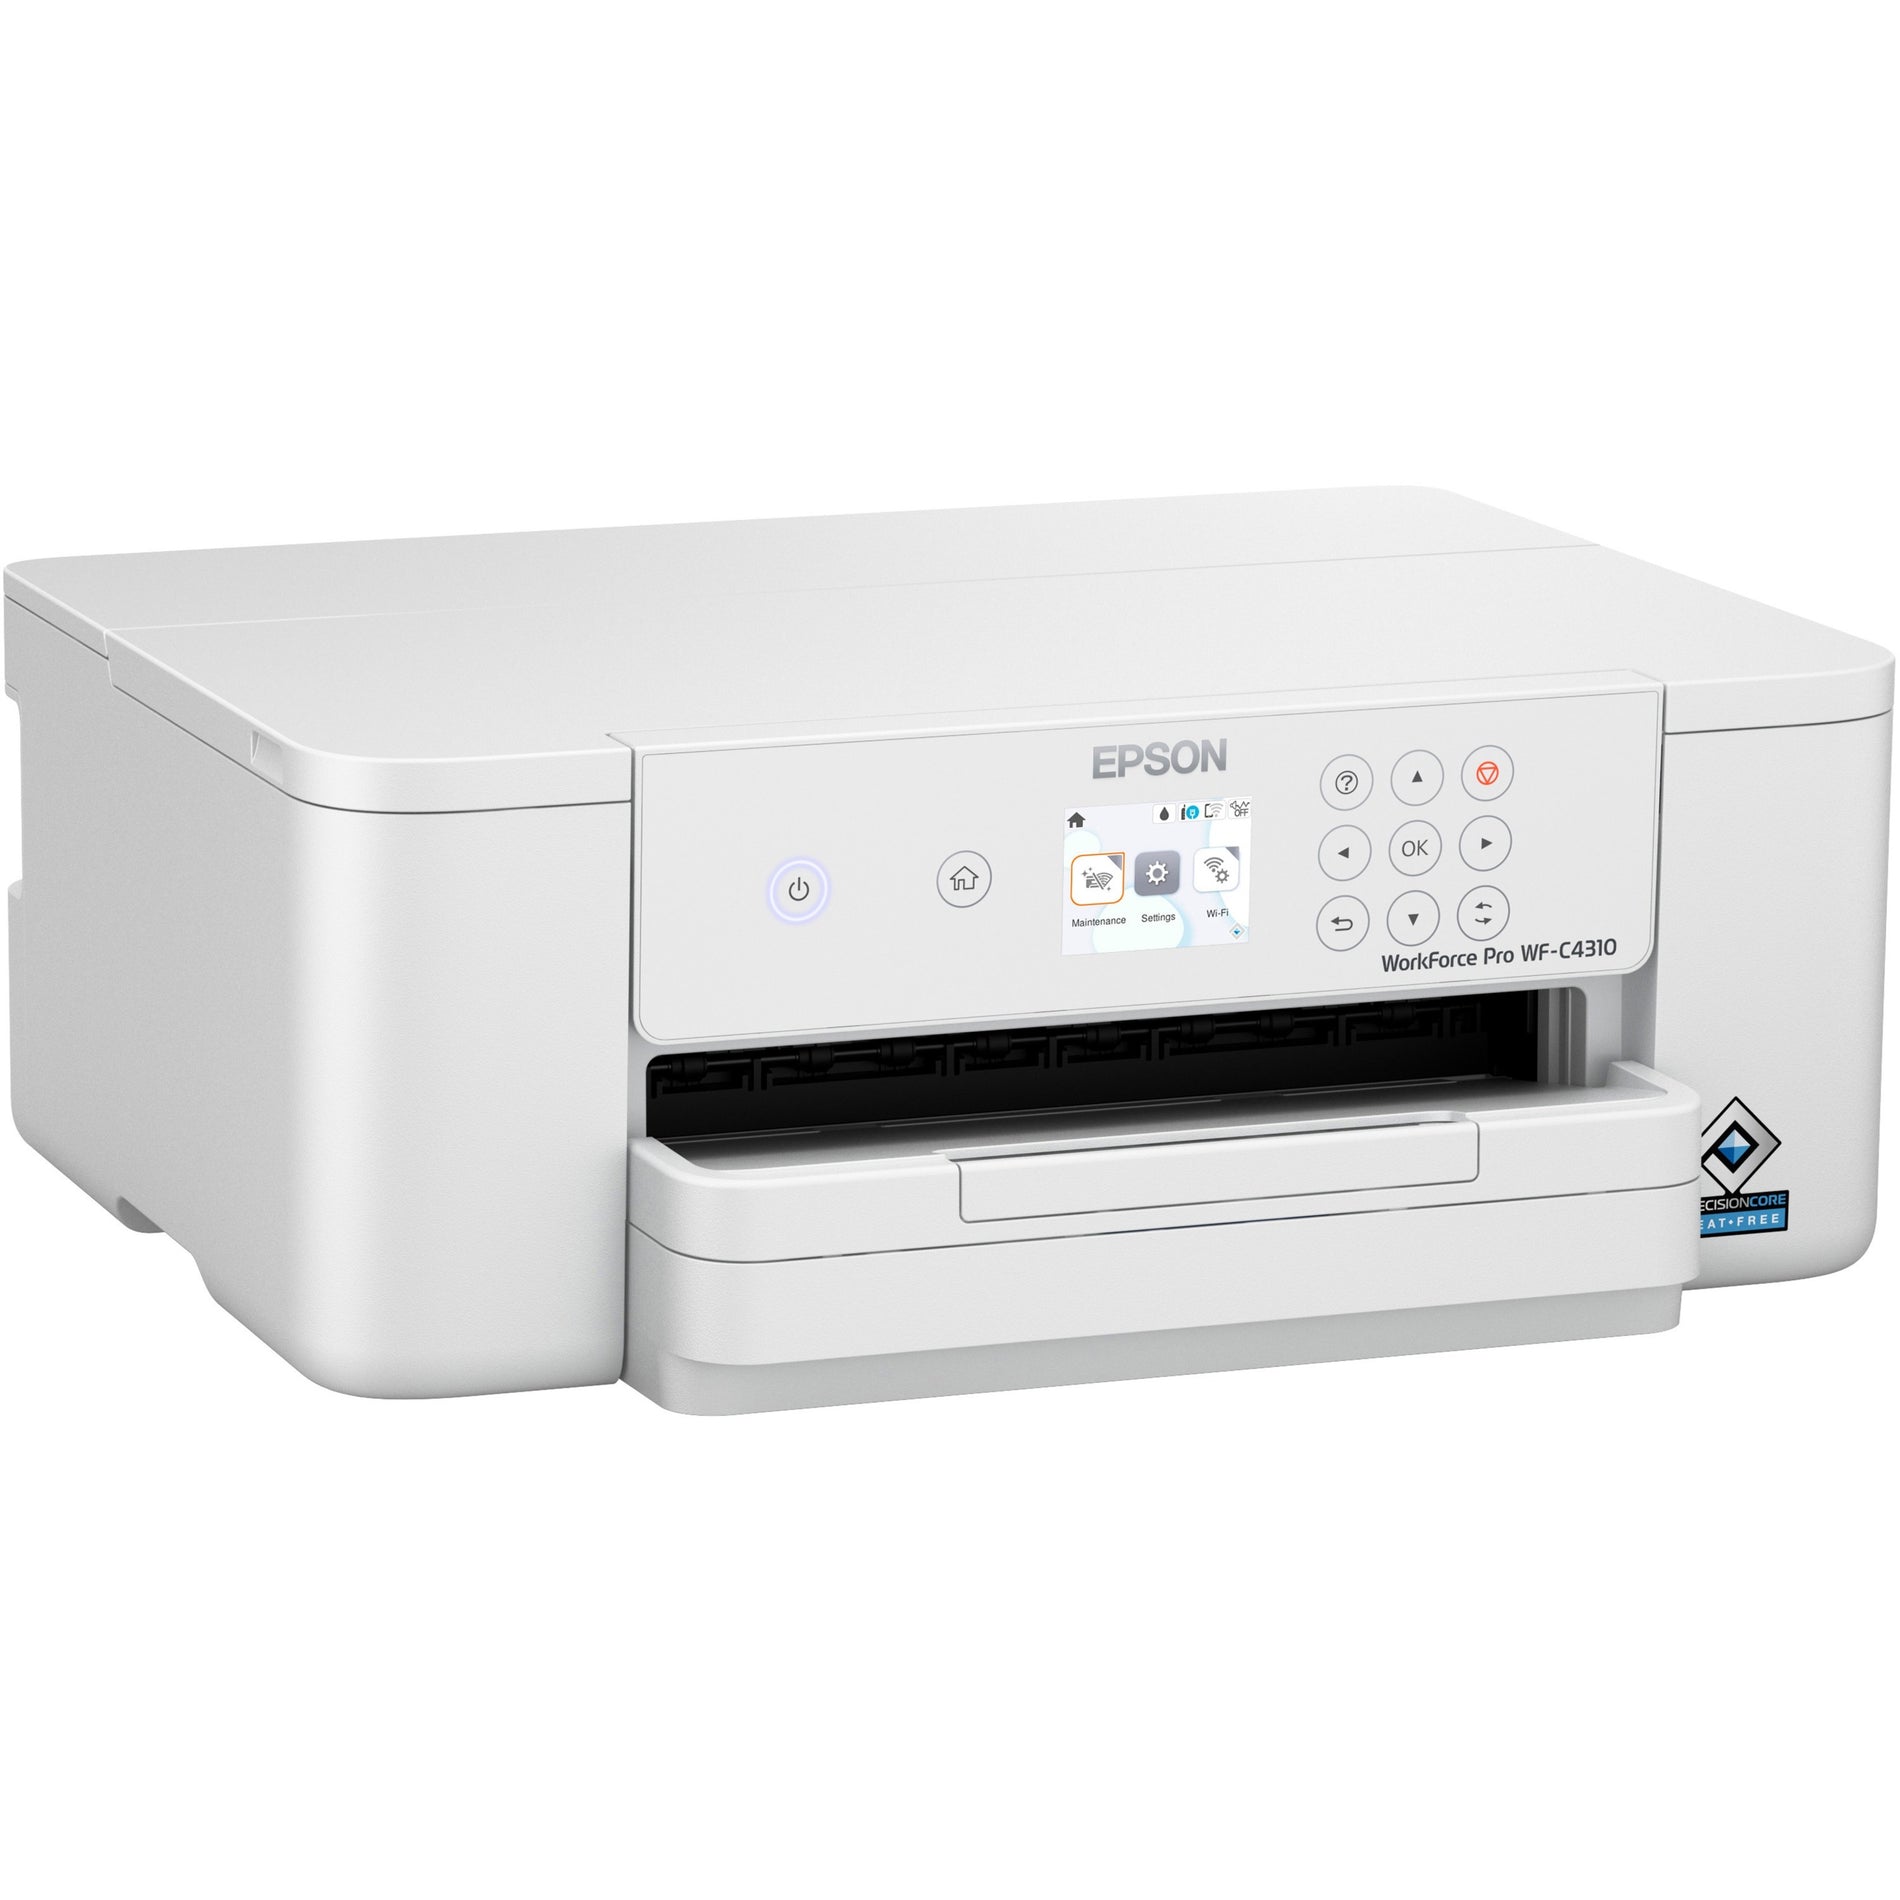 Epson C11CK18201 WorkForce Pro WF-C4310 Color Printer, Wireless Inkjet Printer - Color, 2 Year Warranty, Energy Star, USB